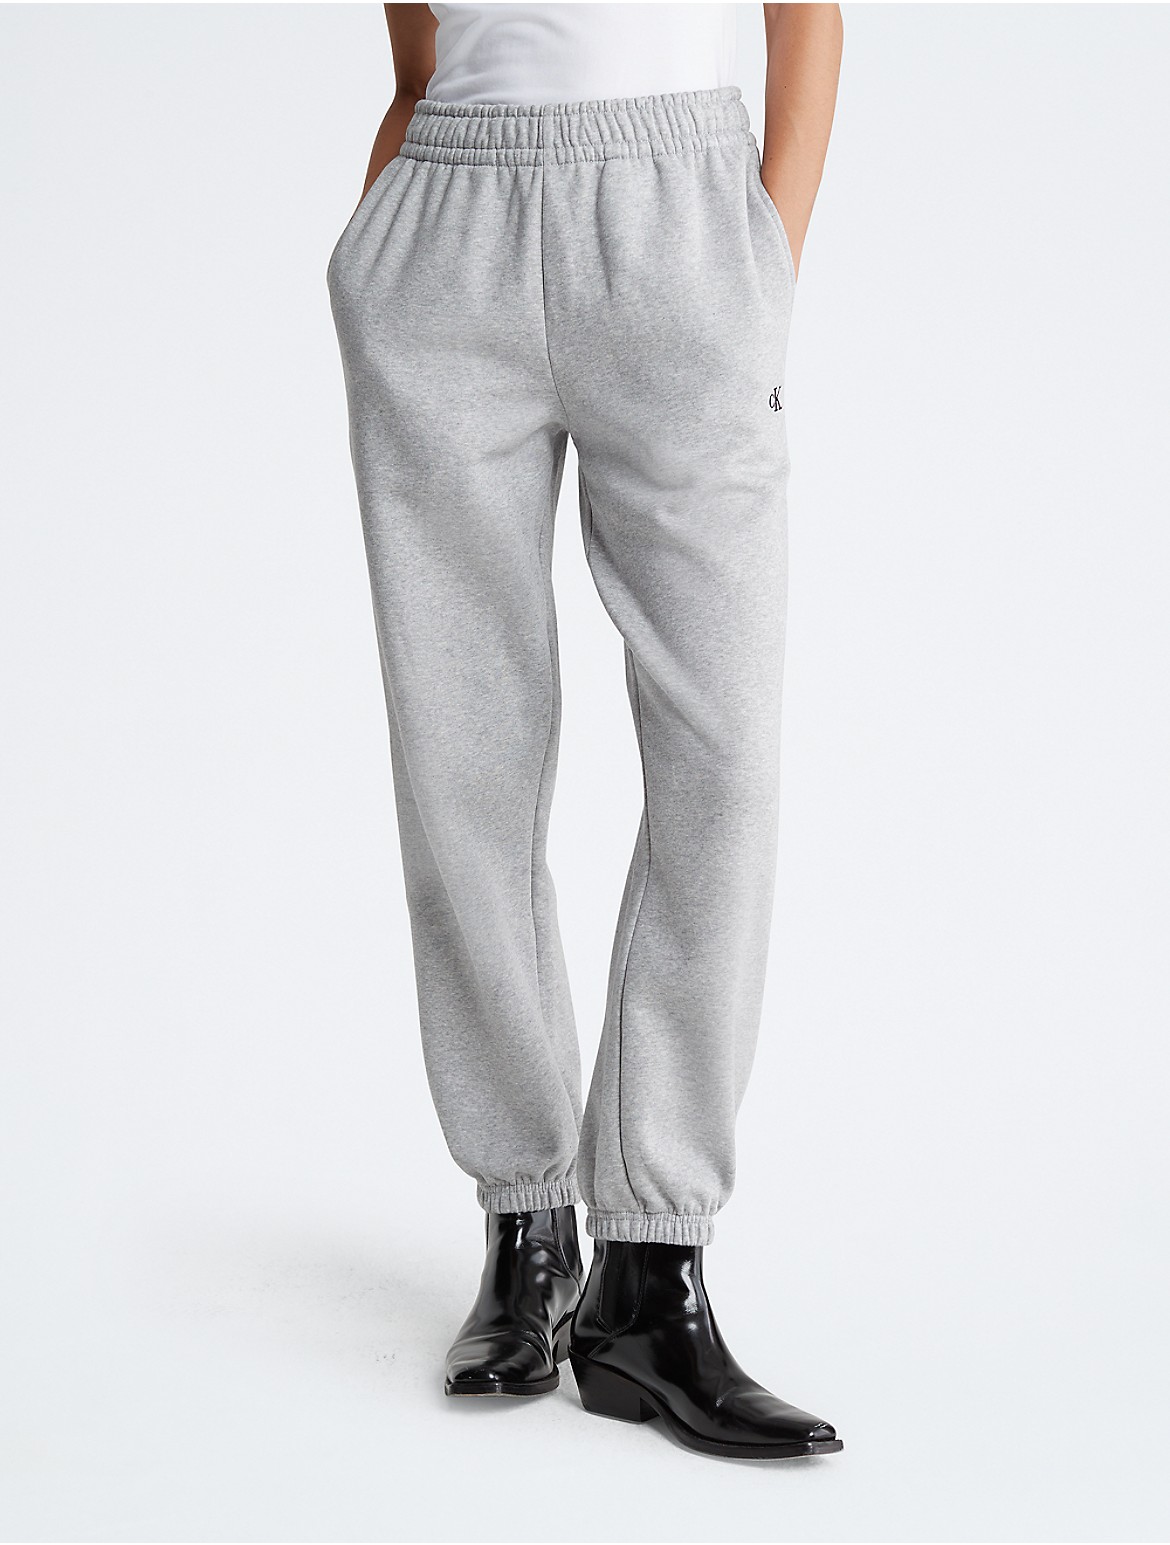 Calvin Klein Women's Archive Logo Fleece Joggers - Grey - XS